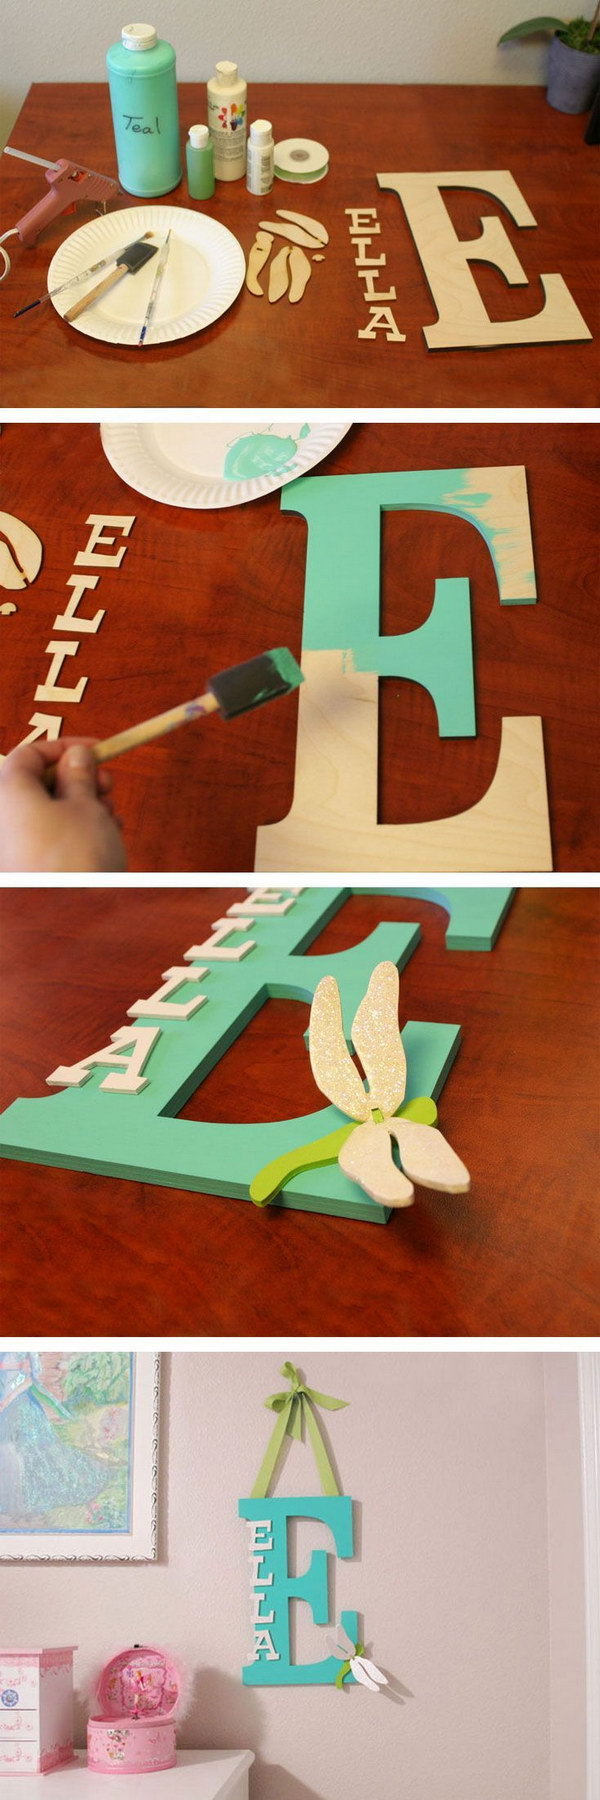 Wooden Letter Craft Ideas
 DIY Letter Ideas & Tutorials Hative